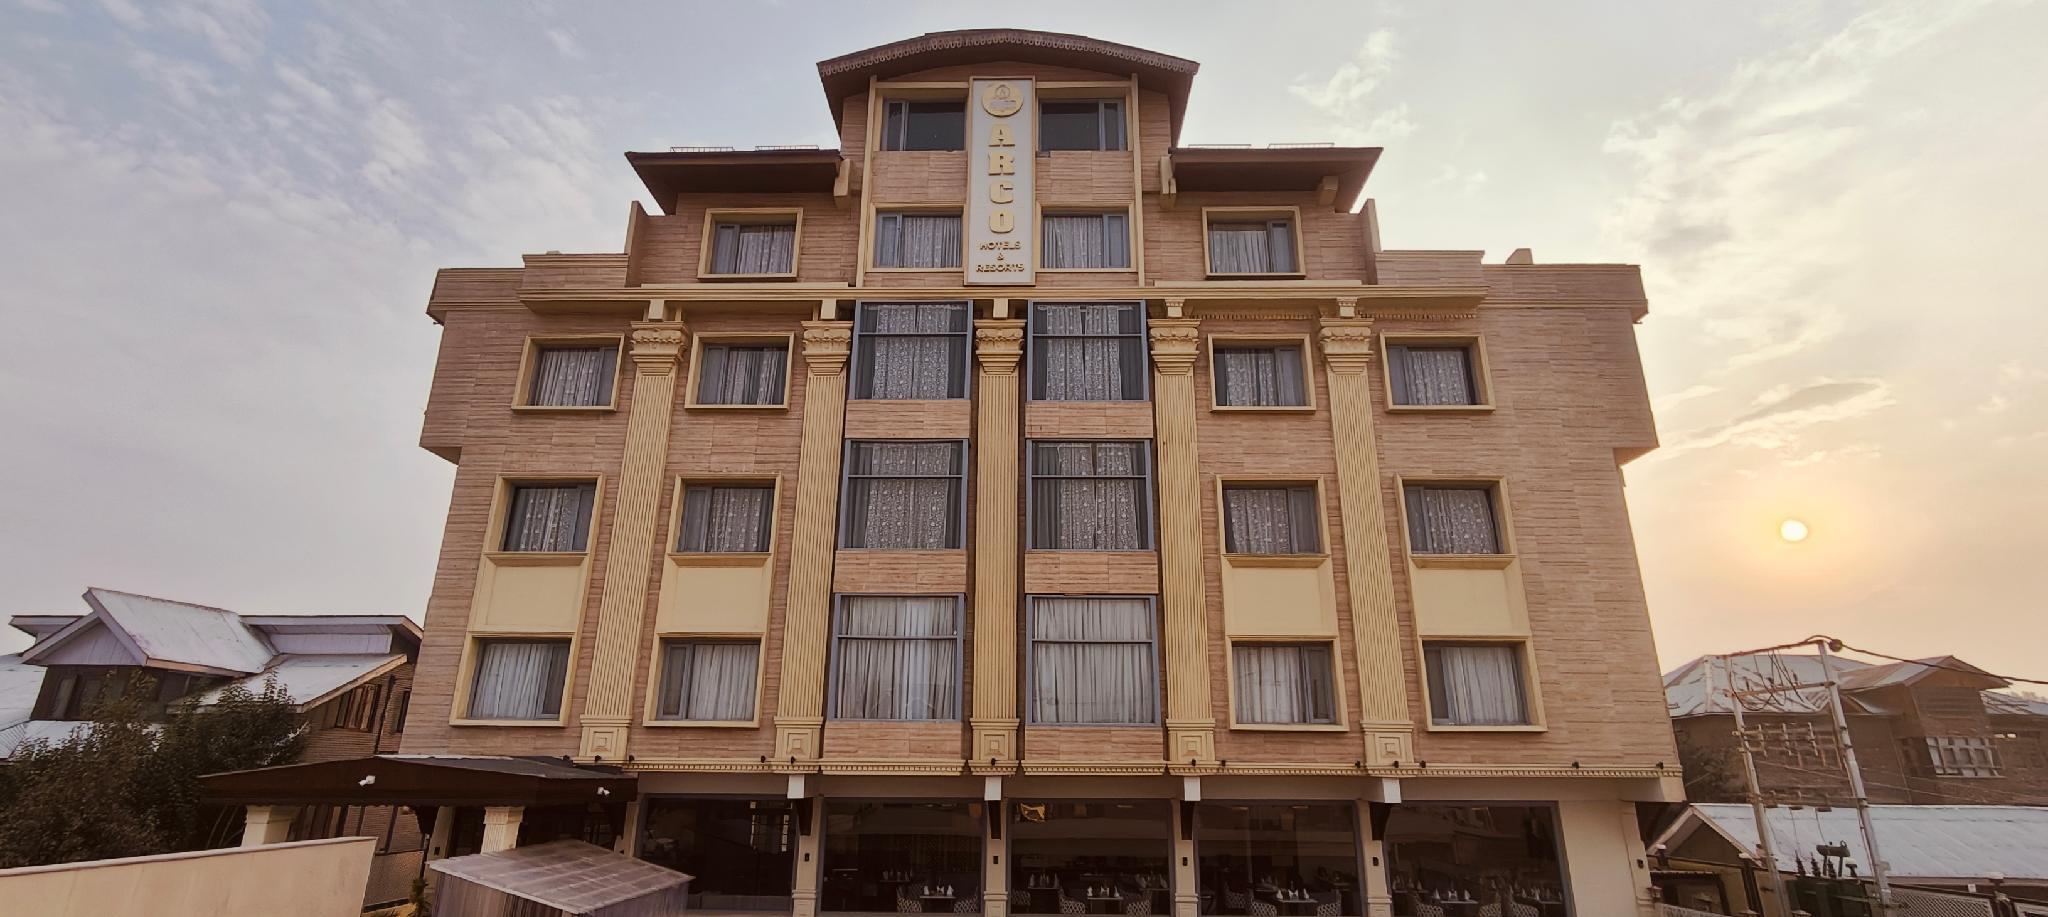 Arco Hotels And Resorts Srinagar - Srinagar